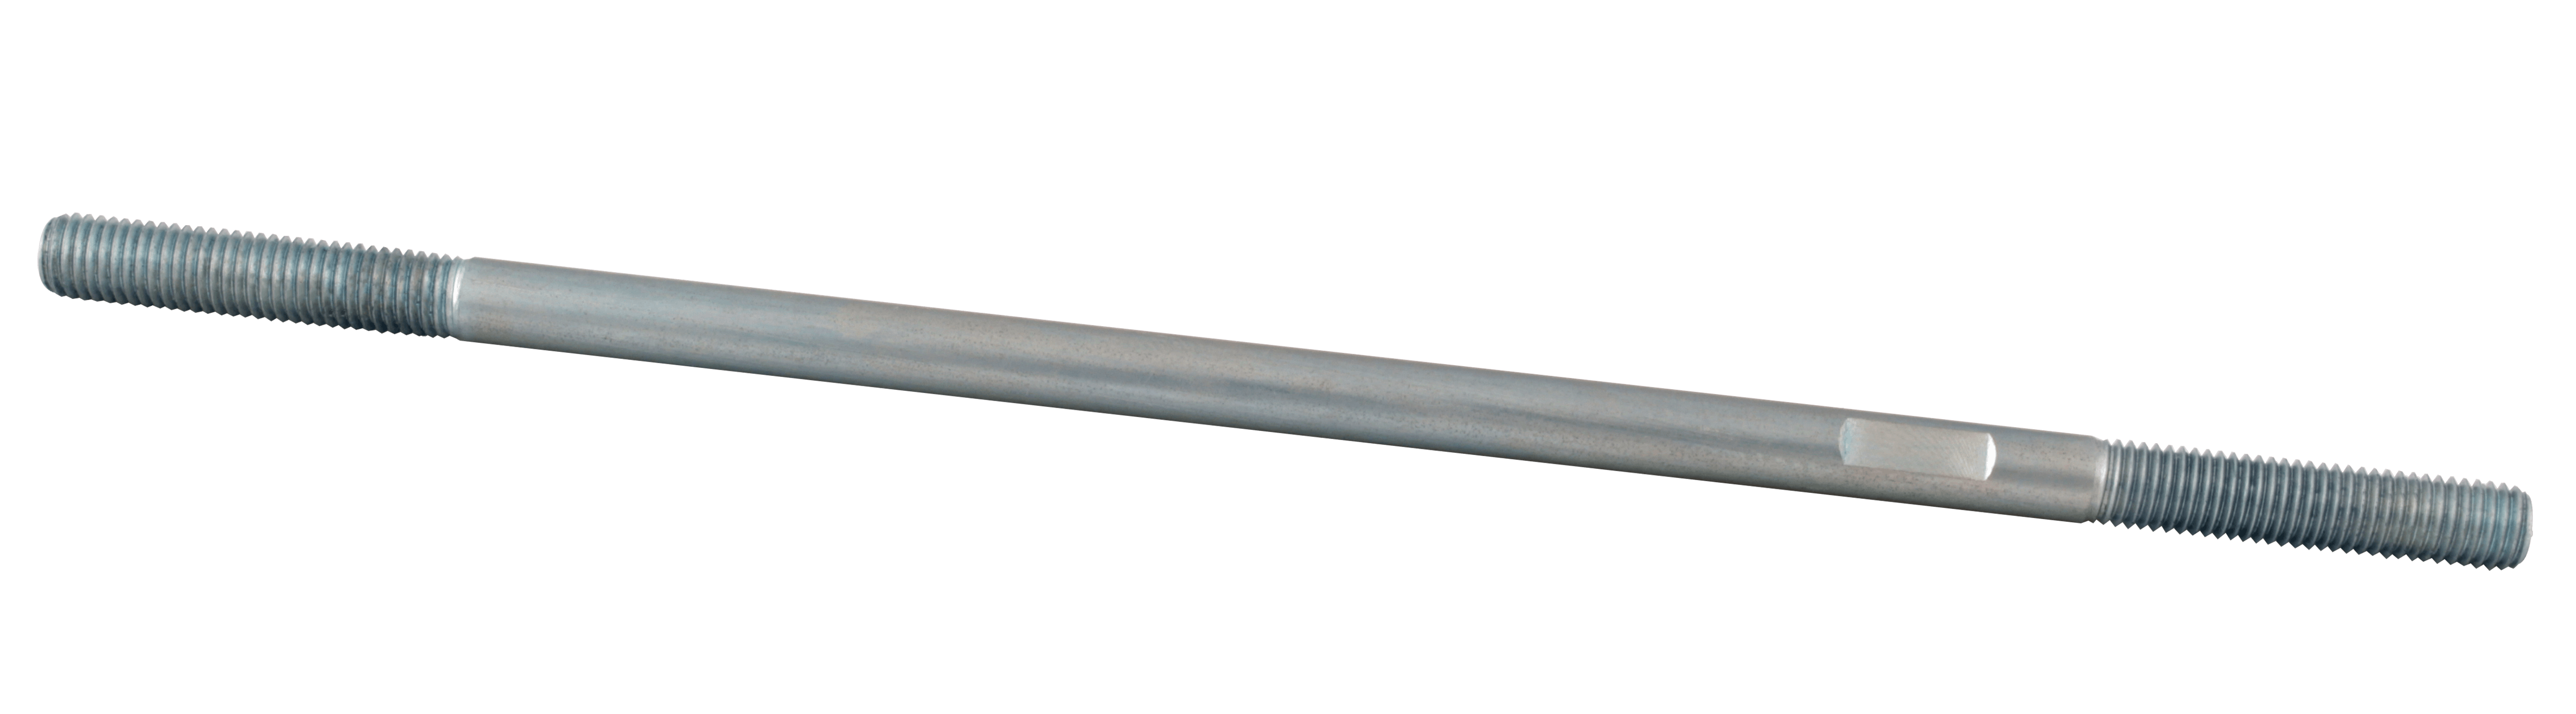 QA1 1698-116 Linkage Rod, Carbon Steel 1/4-28 - 1/4-28 X 21 inch Long